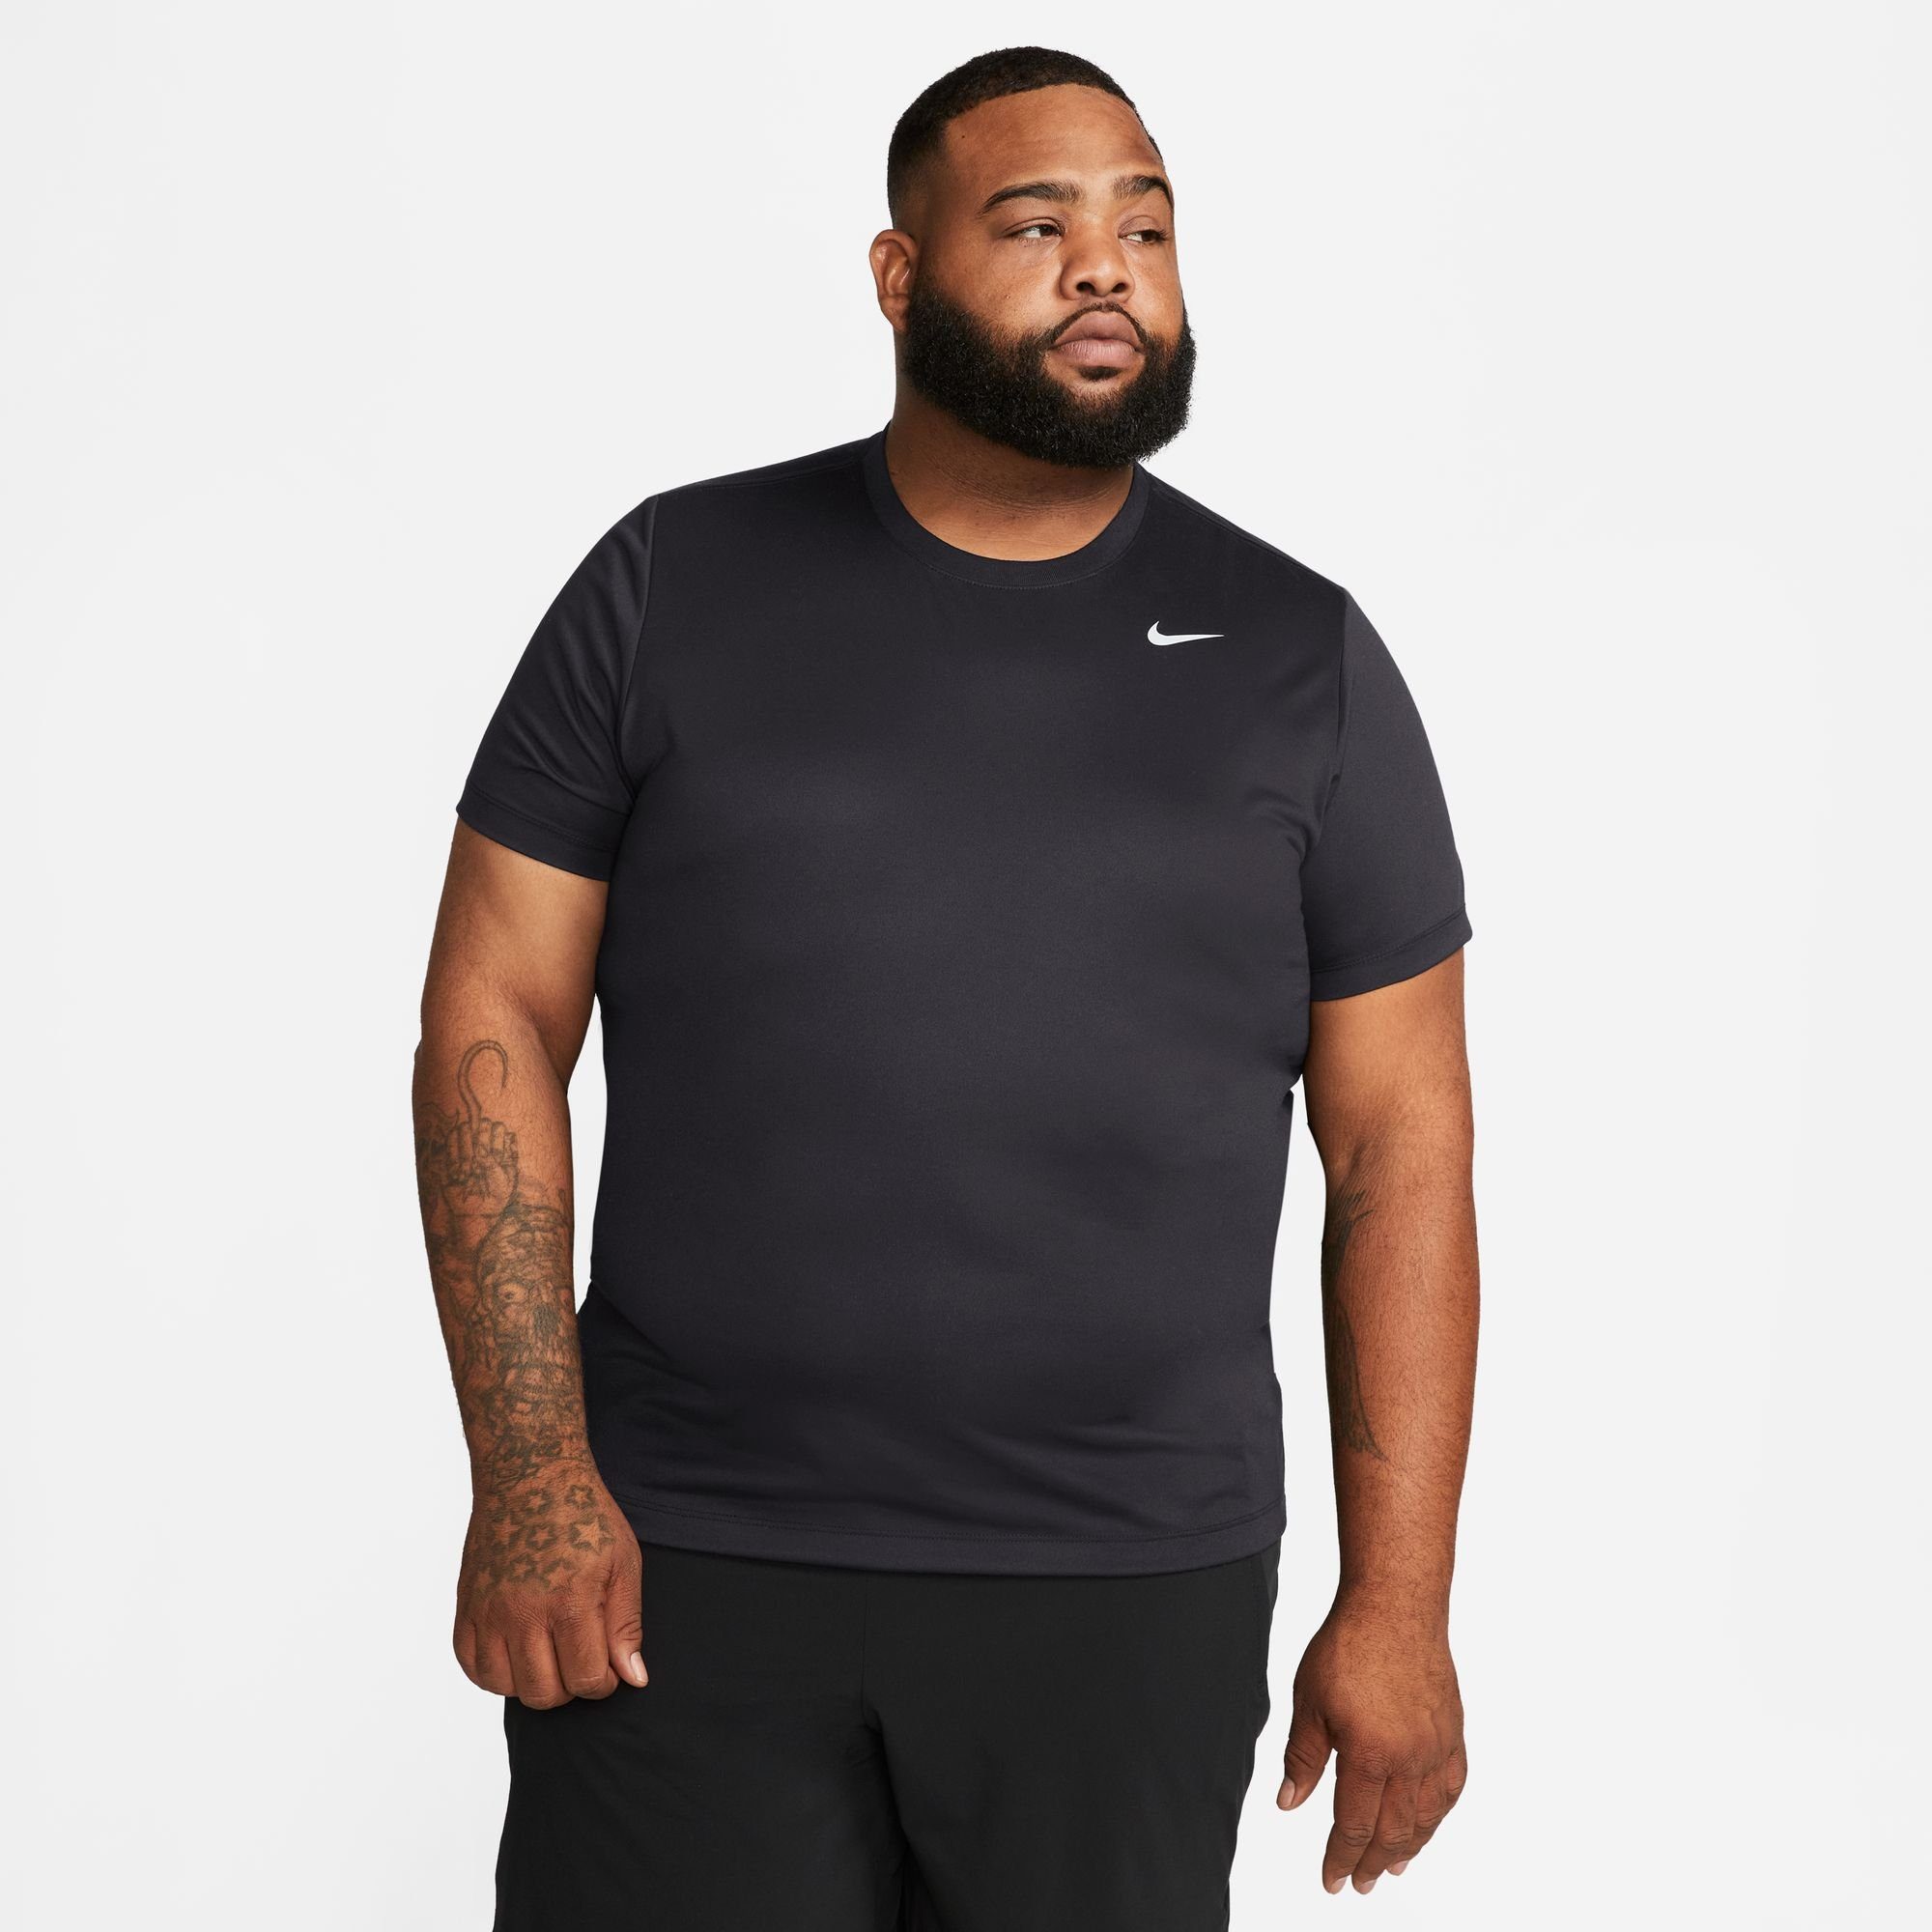 MEN'S BLACK/MATTE SILVER Trainingsshirt Nike FITNESS LEGEND DRI-FIT T-SHIRT